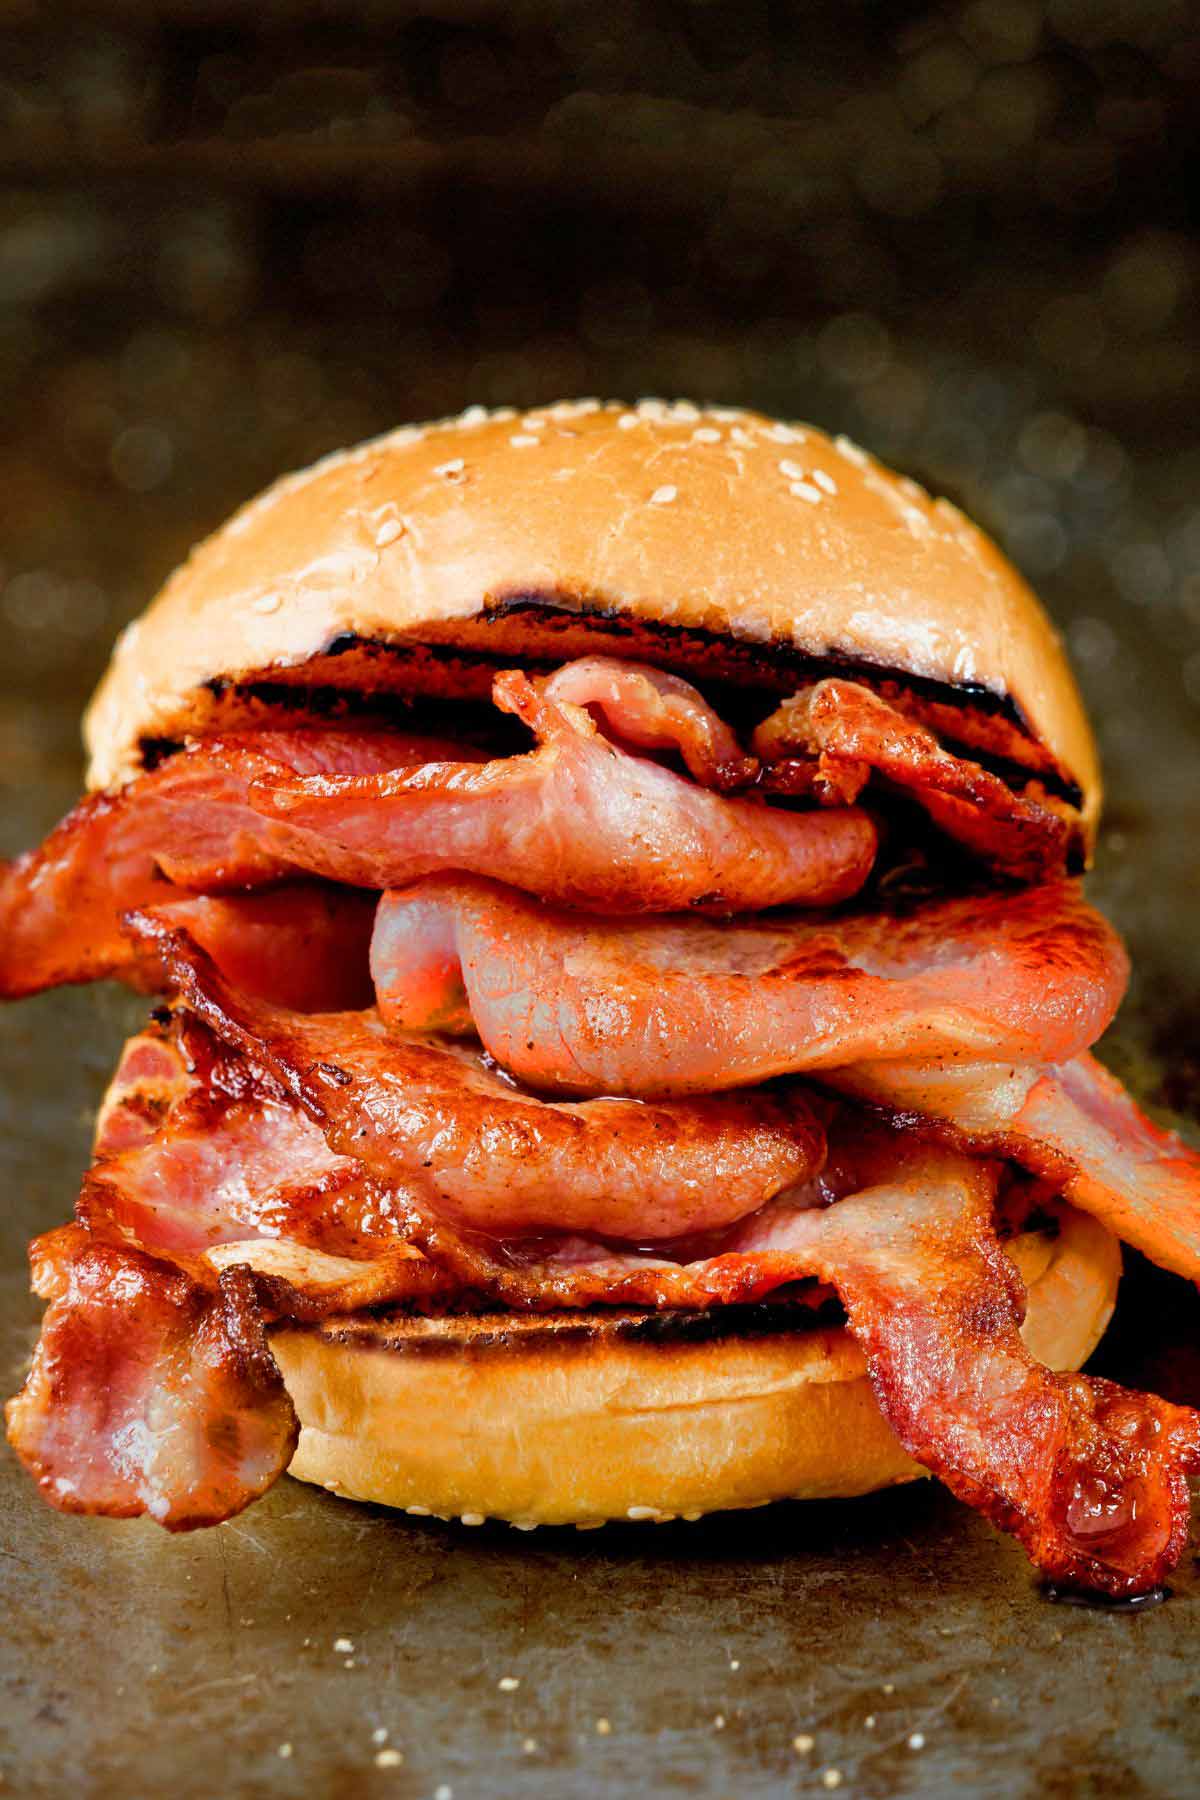 A fried back bacon sandwich on a sesame seed bun.